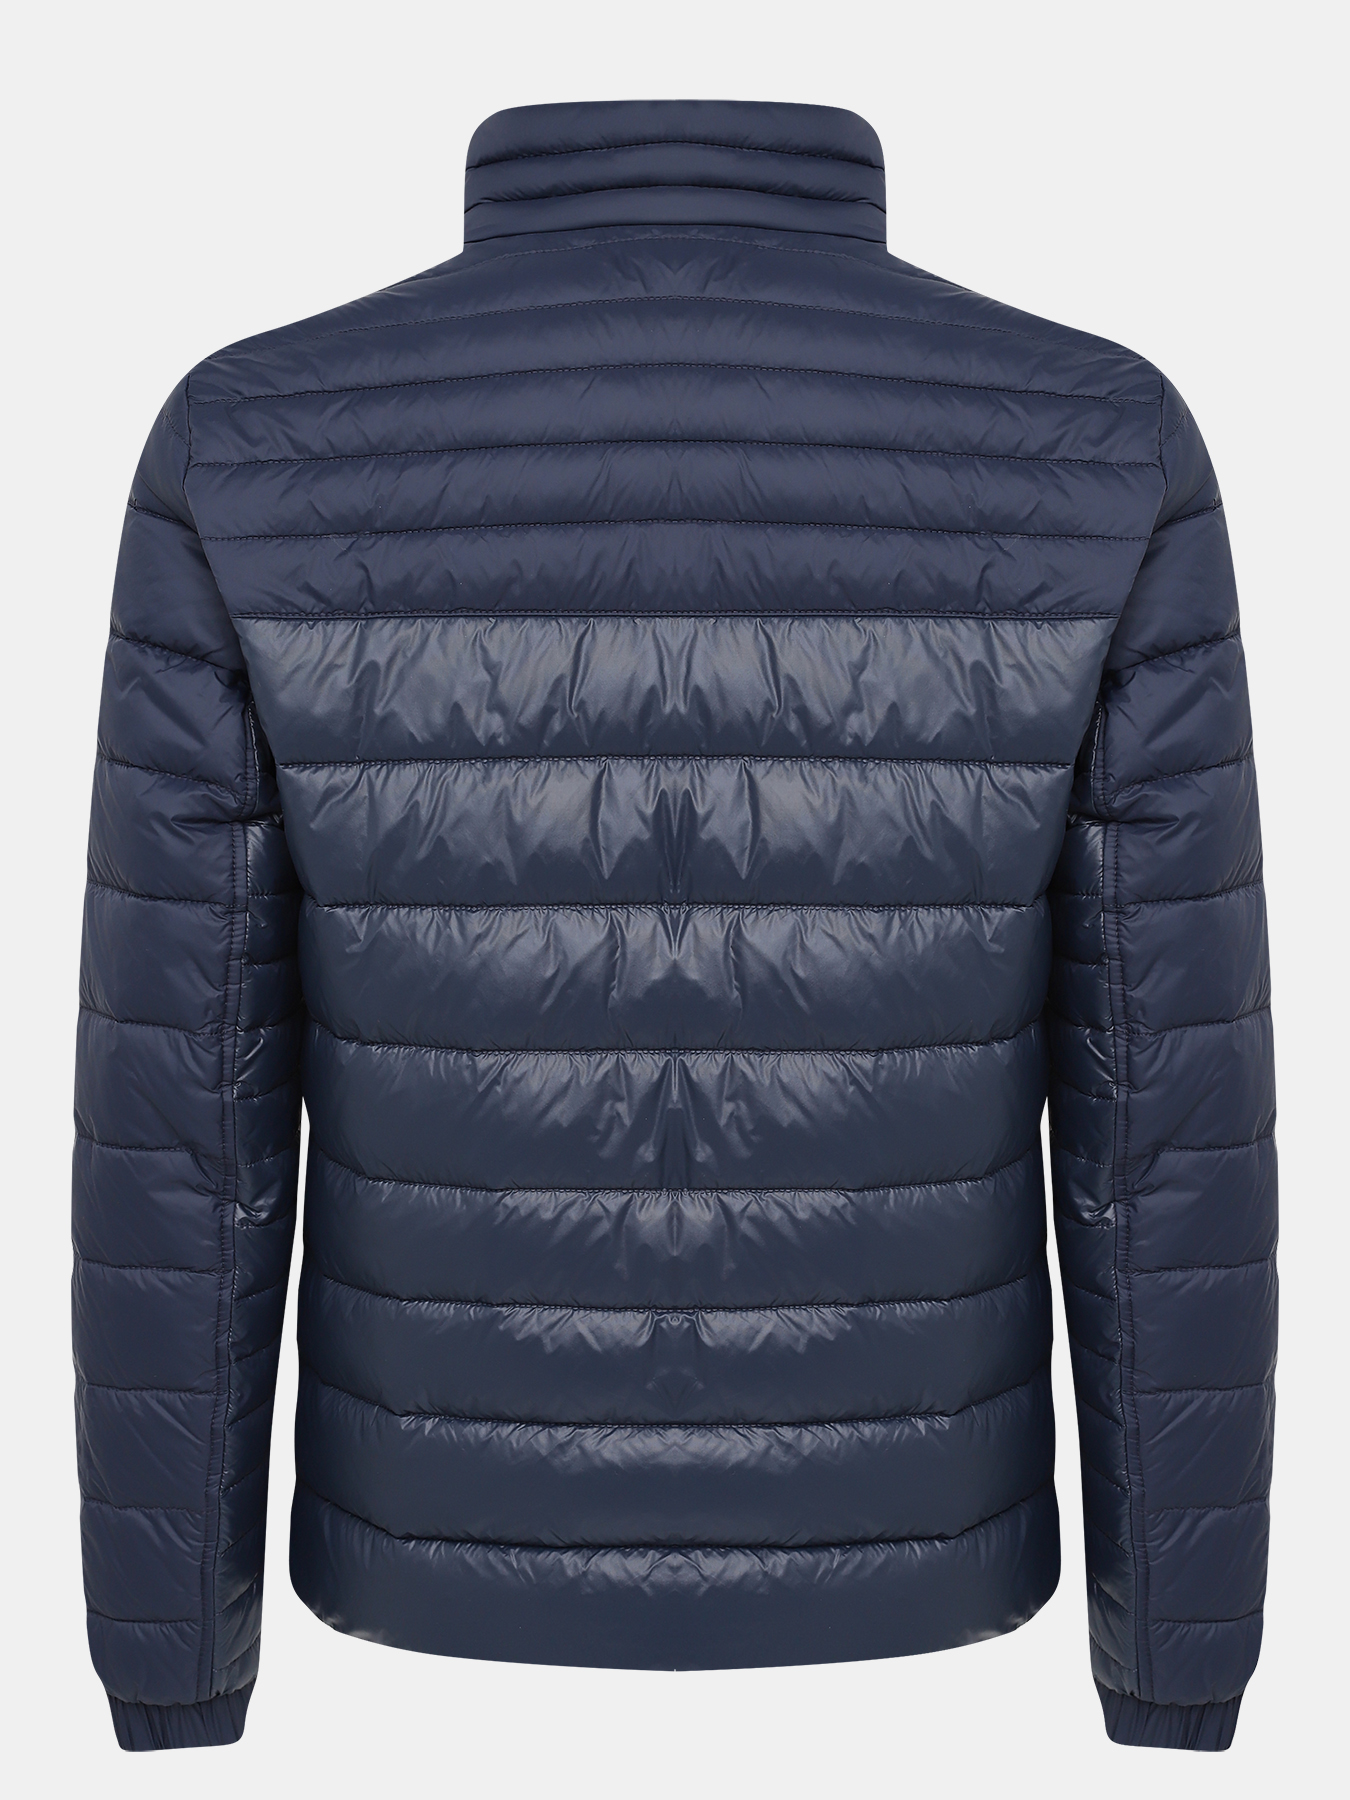 Куртка Oden BOSS 434079-027, цвет темно-синий, размер 52 - фото 5